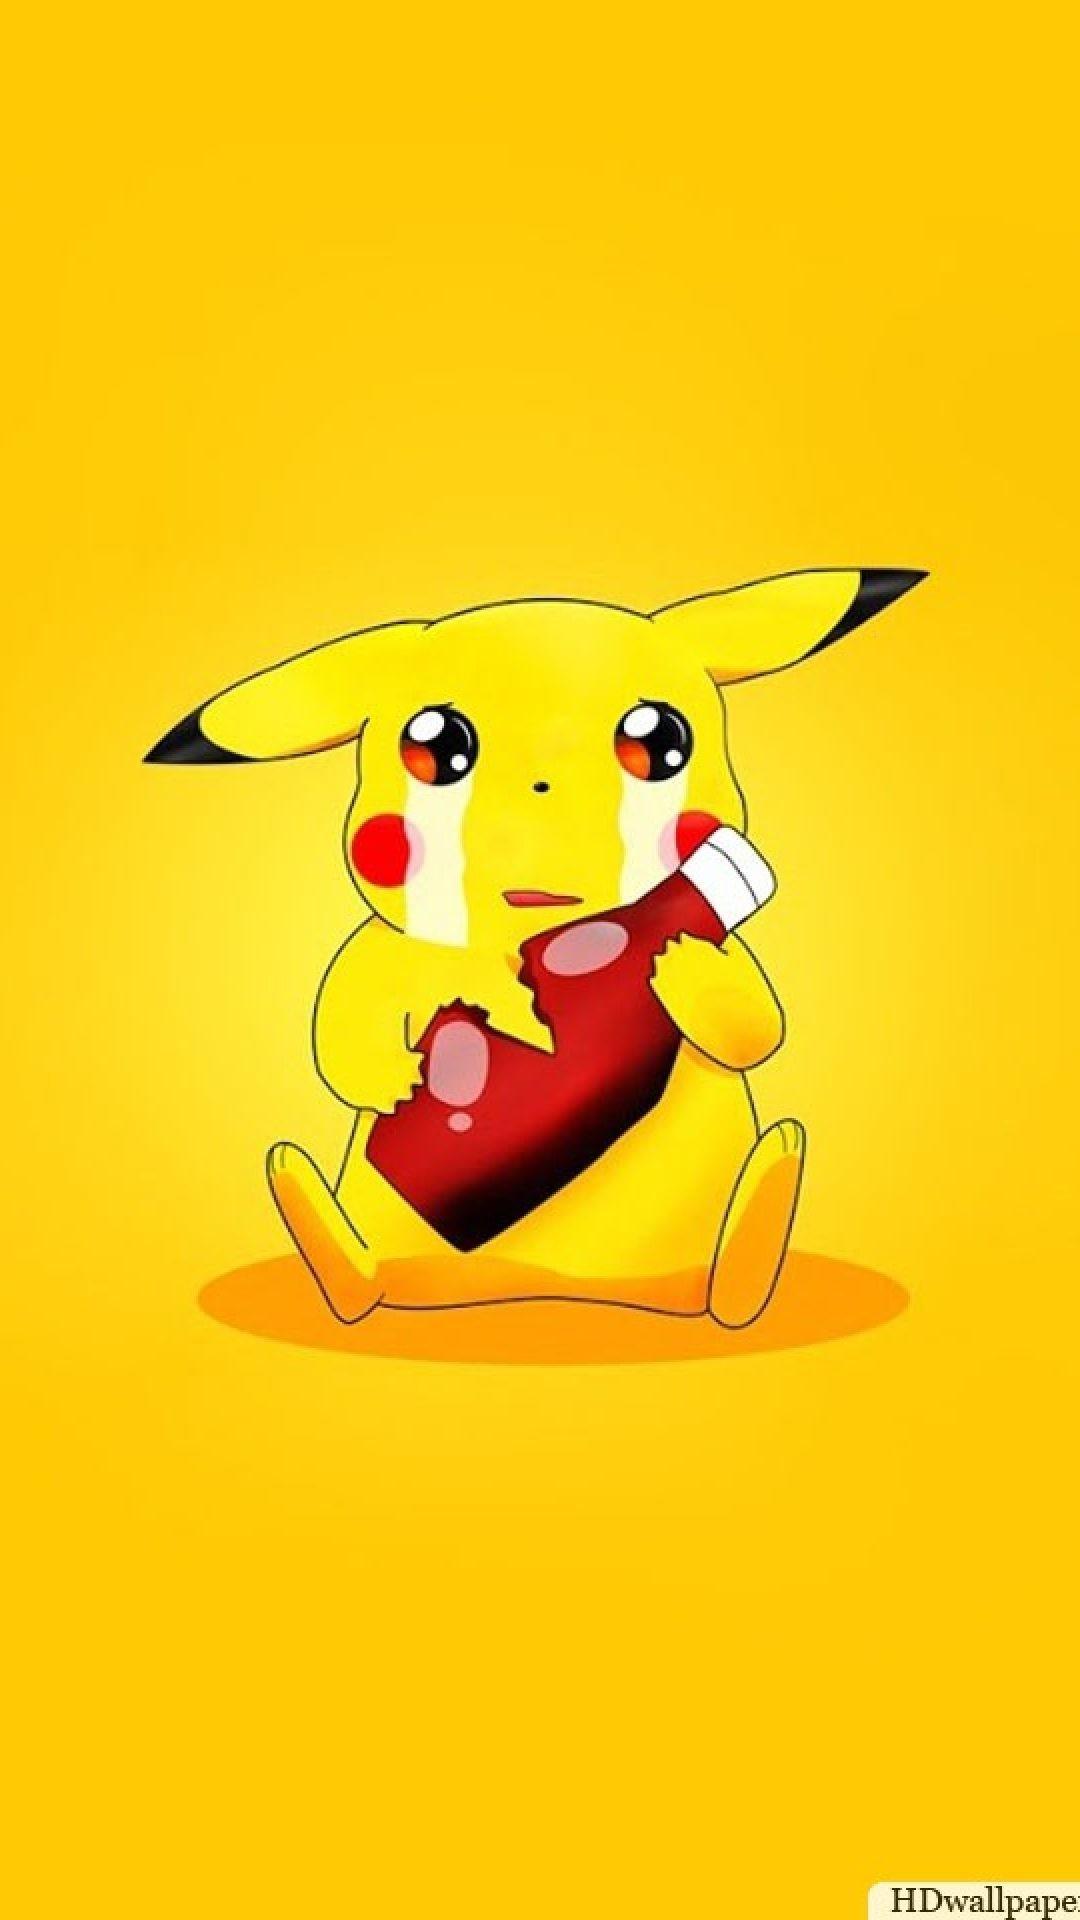 Cute Pikachu Image Wallpaper iPad Wallpaper